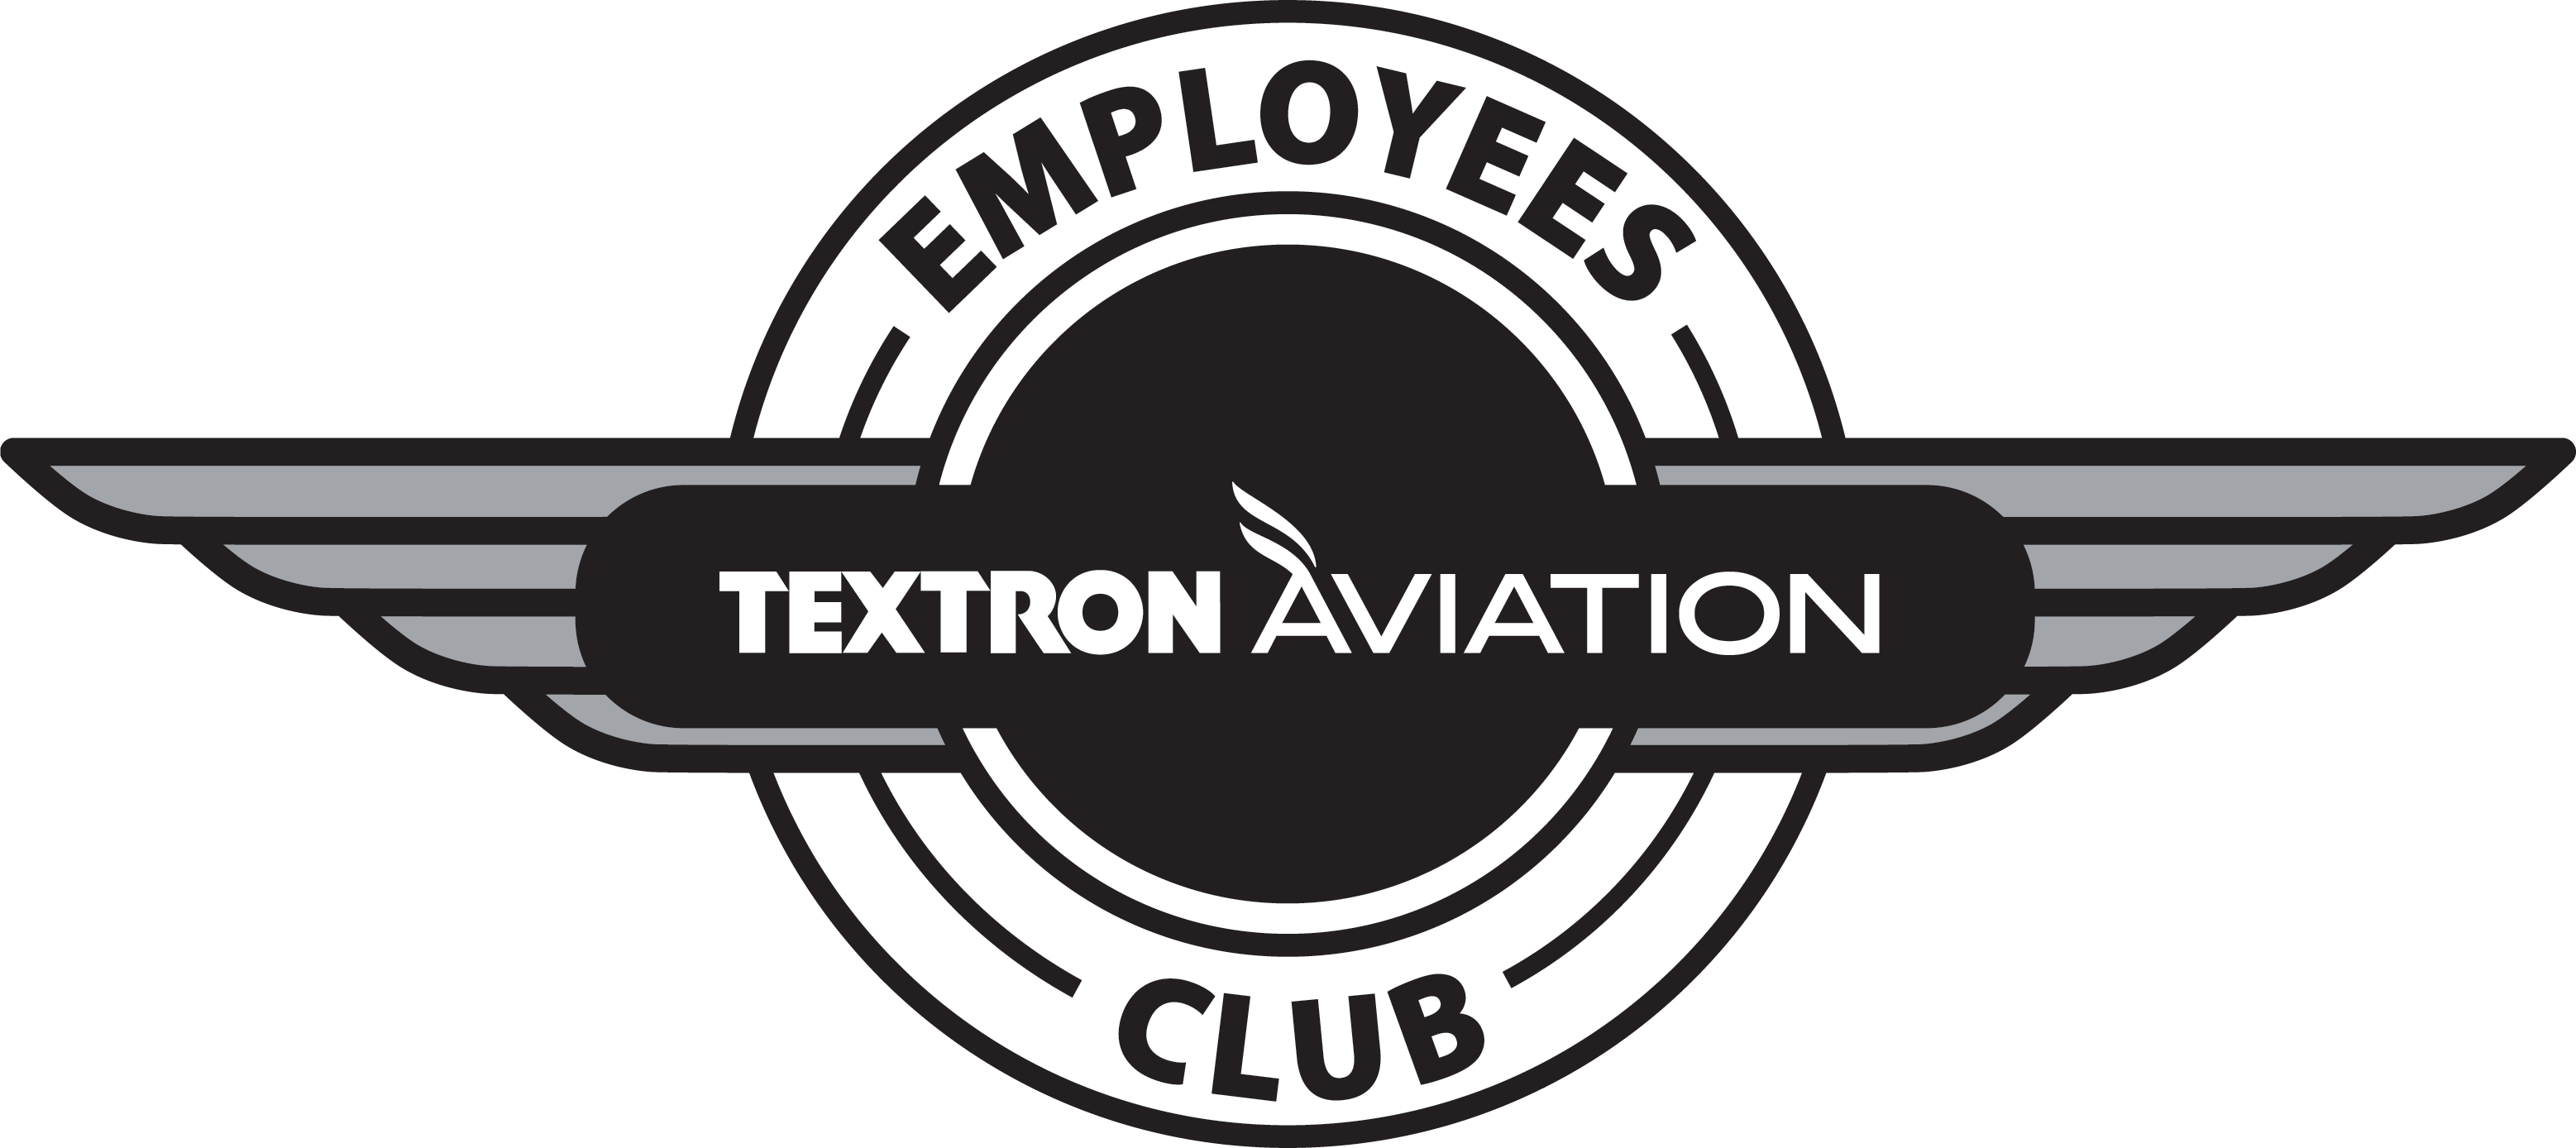 Textron Aviation Employees Club